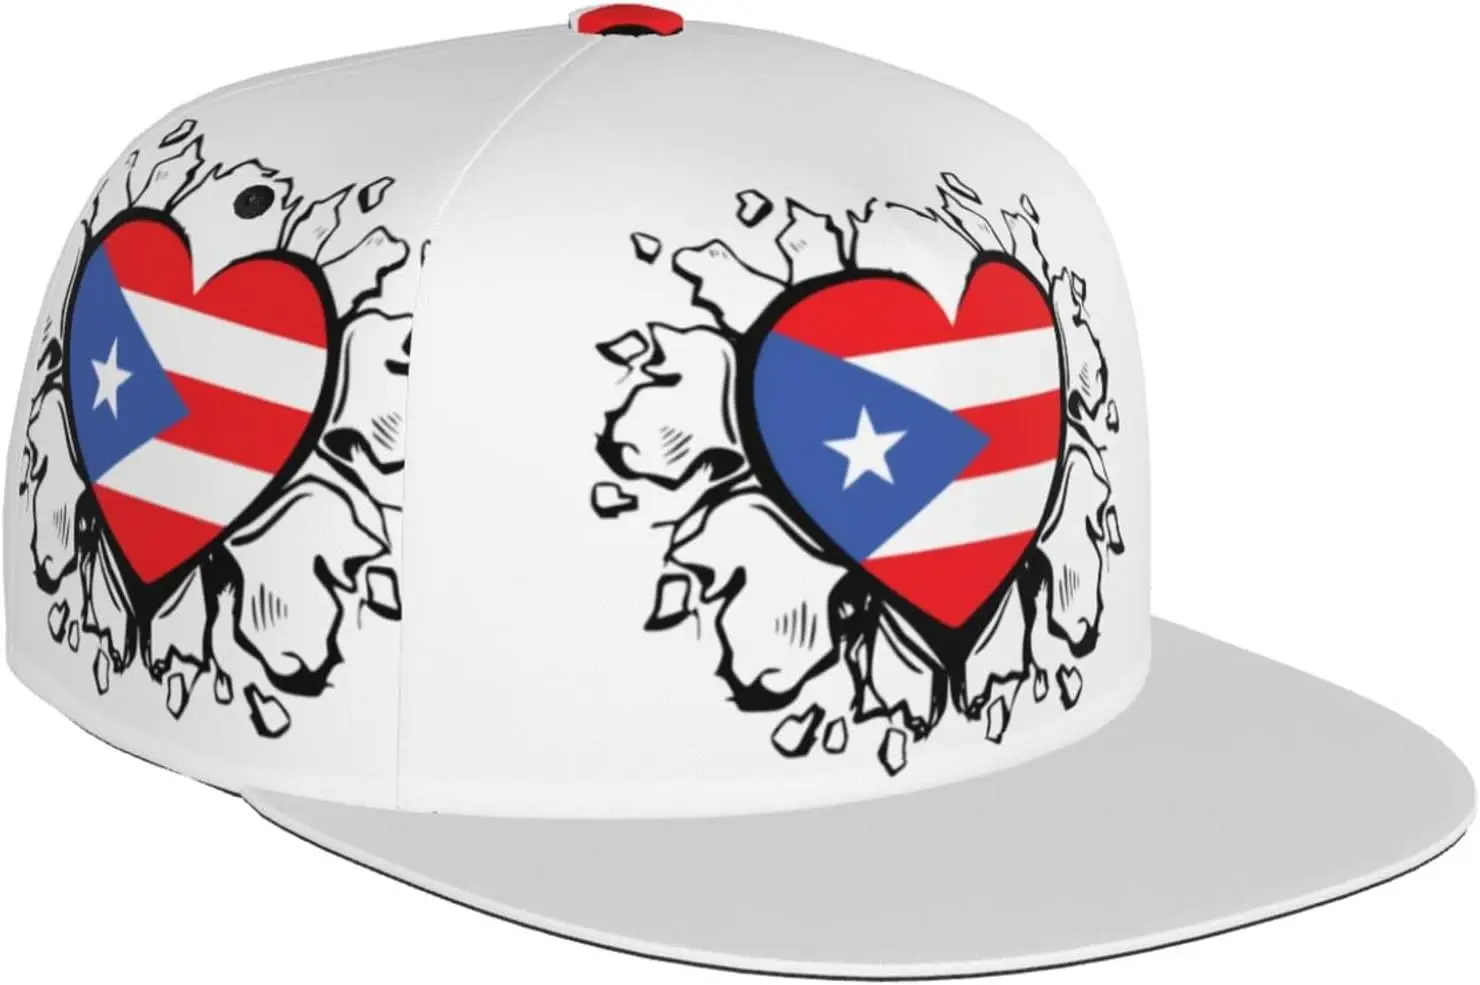 Puerto Rico Hat - $27.95